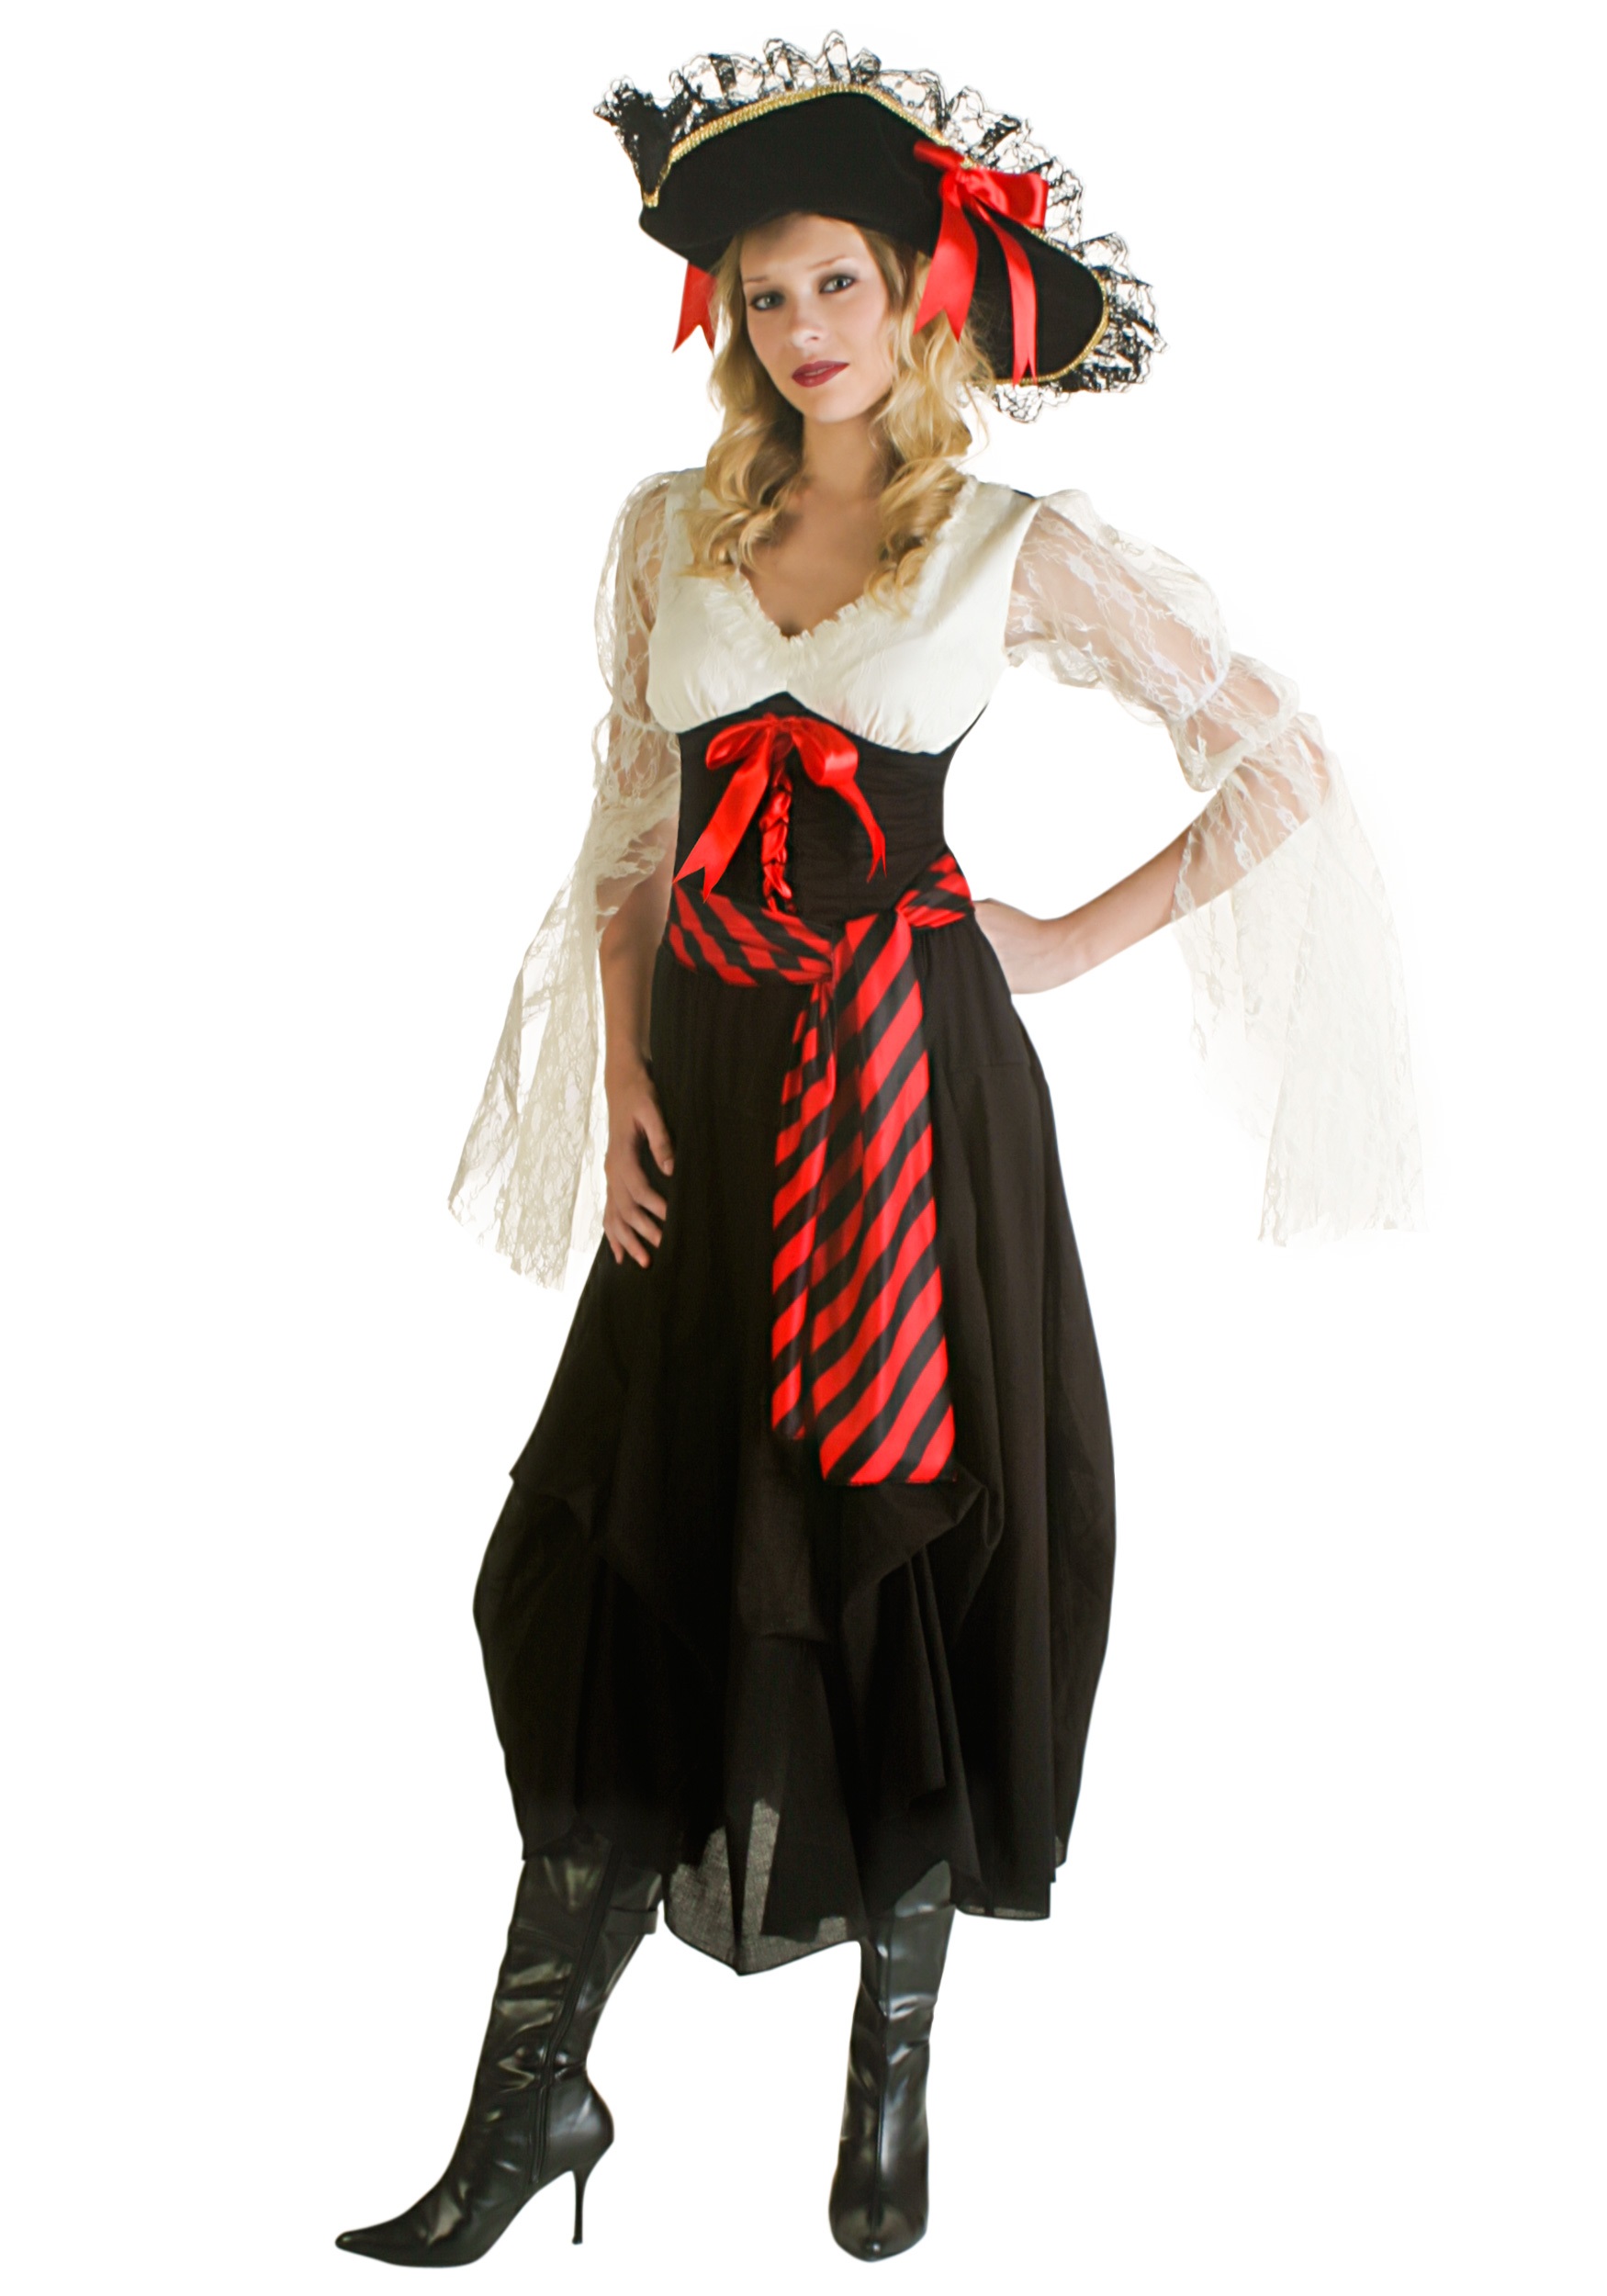 Sexy Female Pirate Costume Halloween Costume Ideas 2019 7243